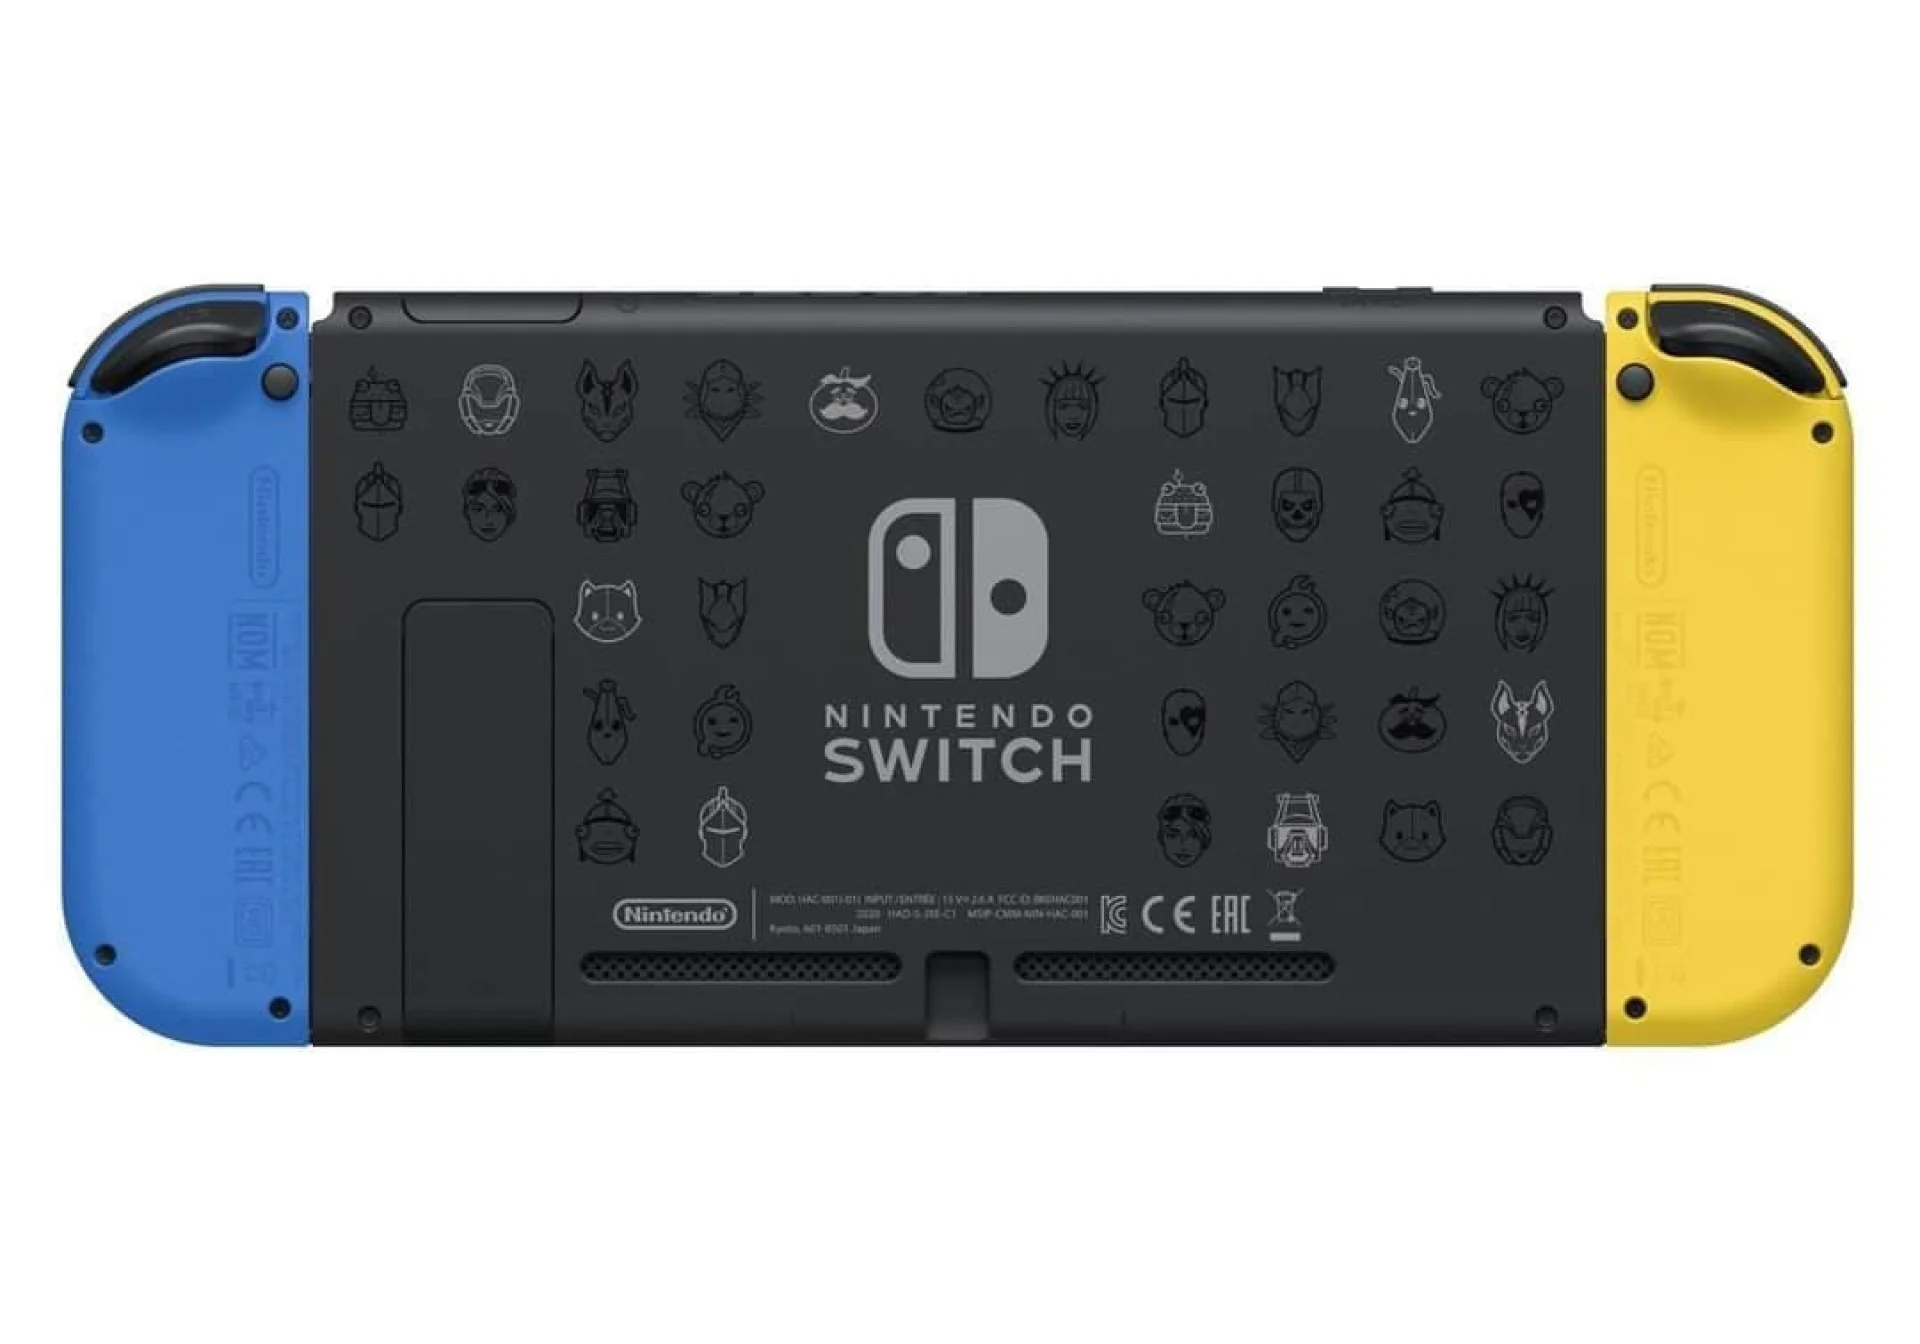 Nintendo Switch Fortnite Console announced!